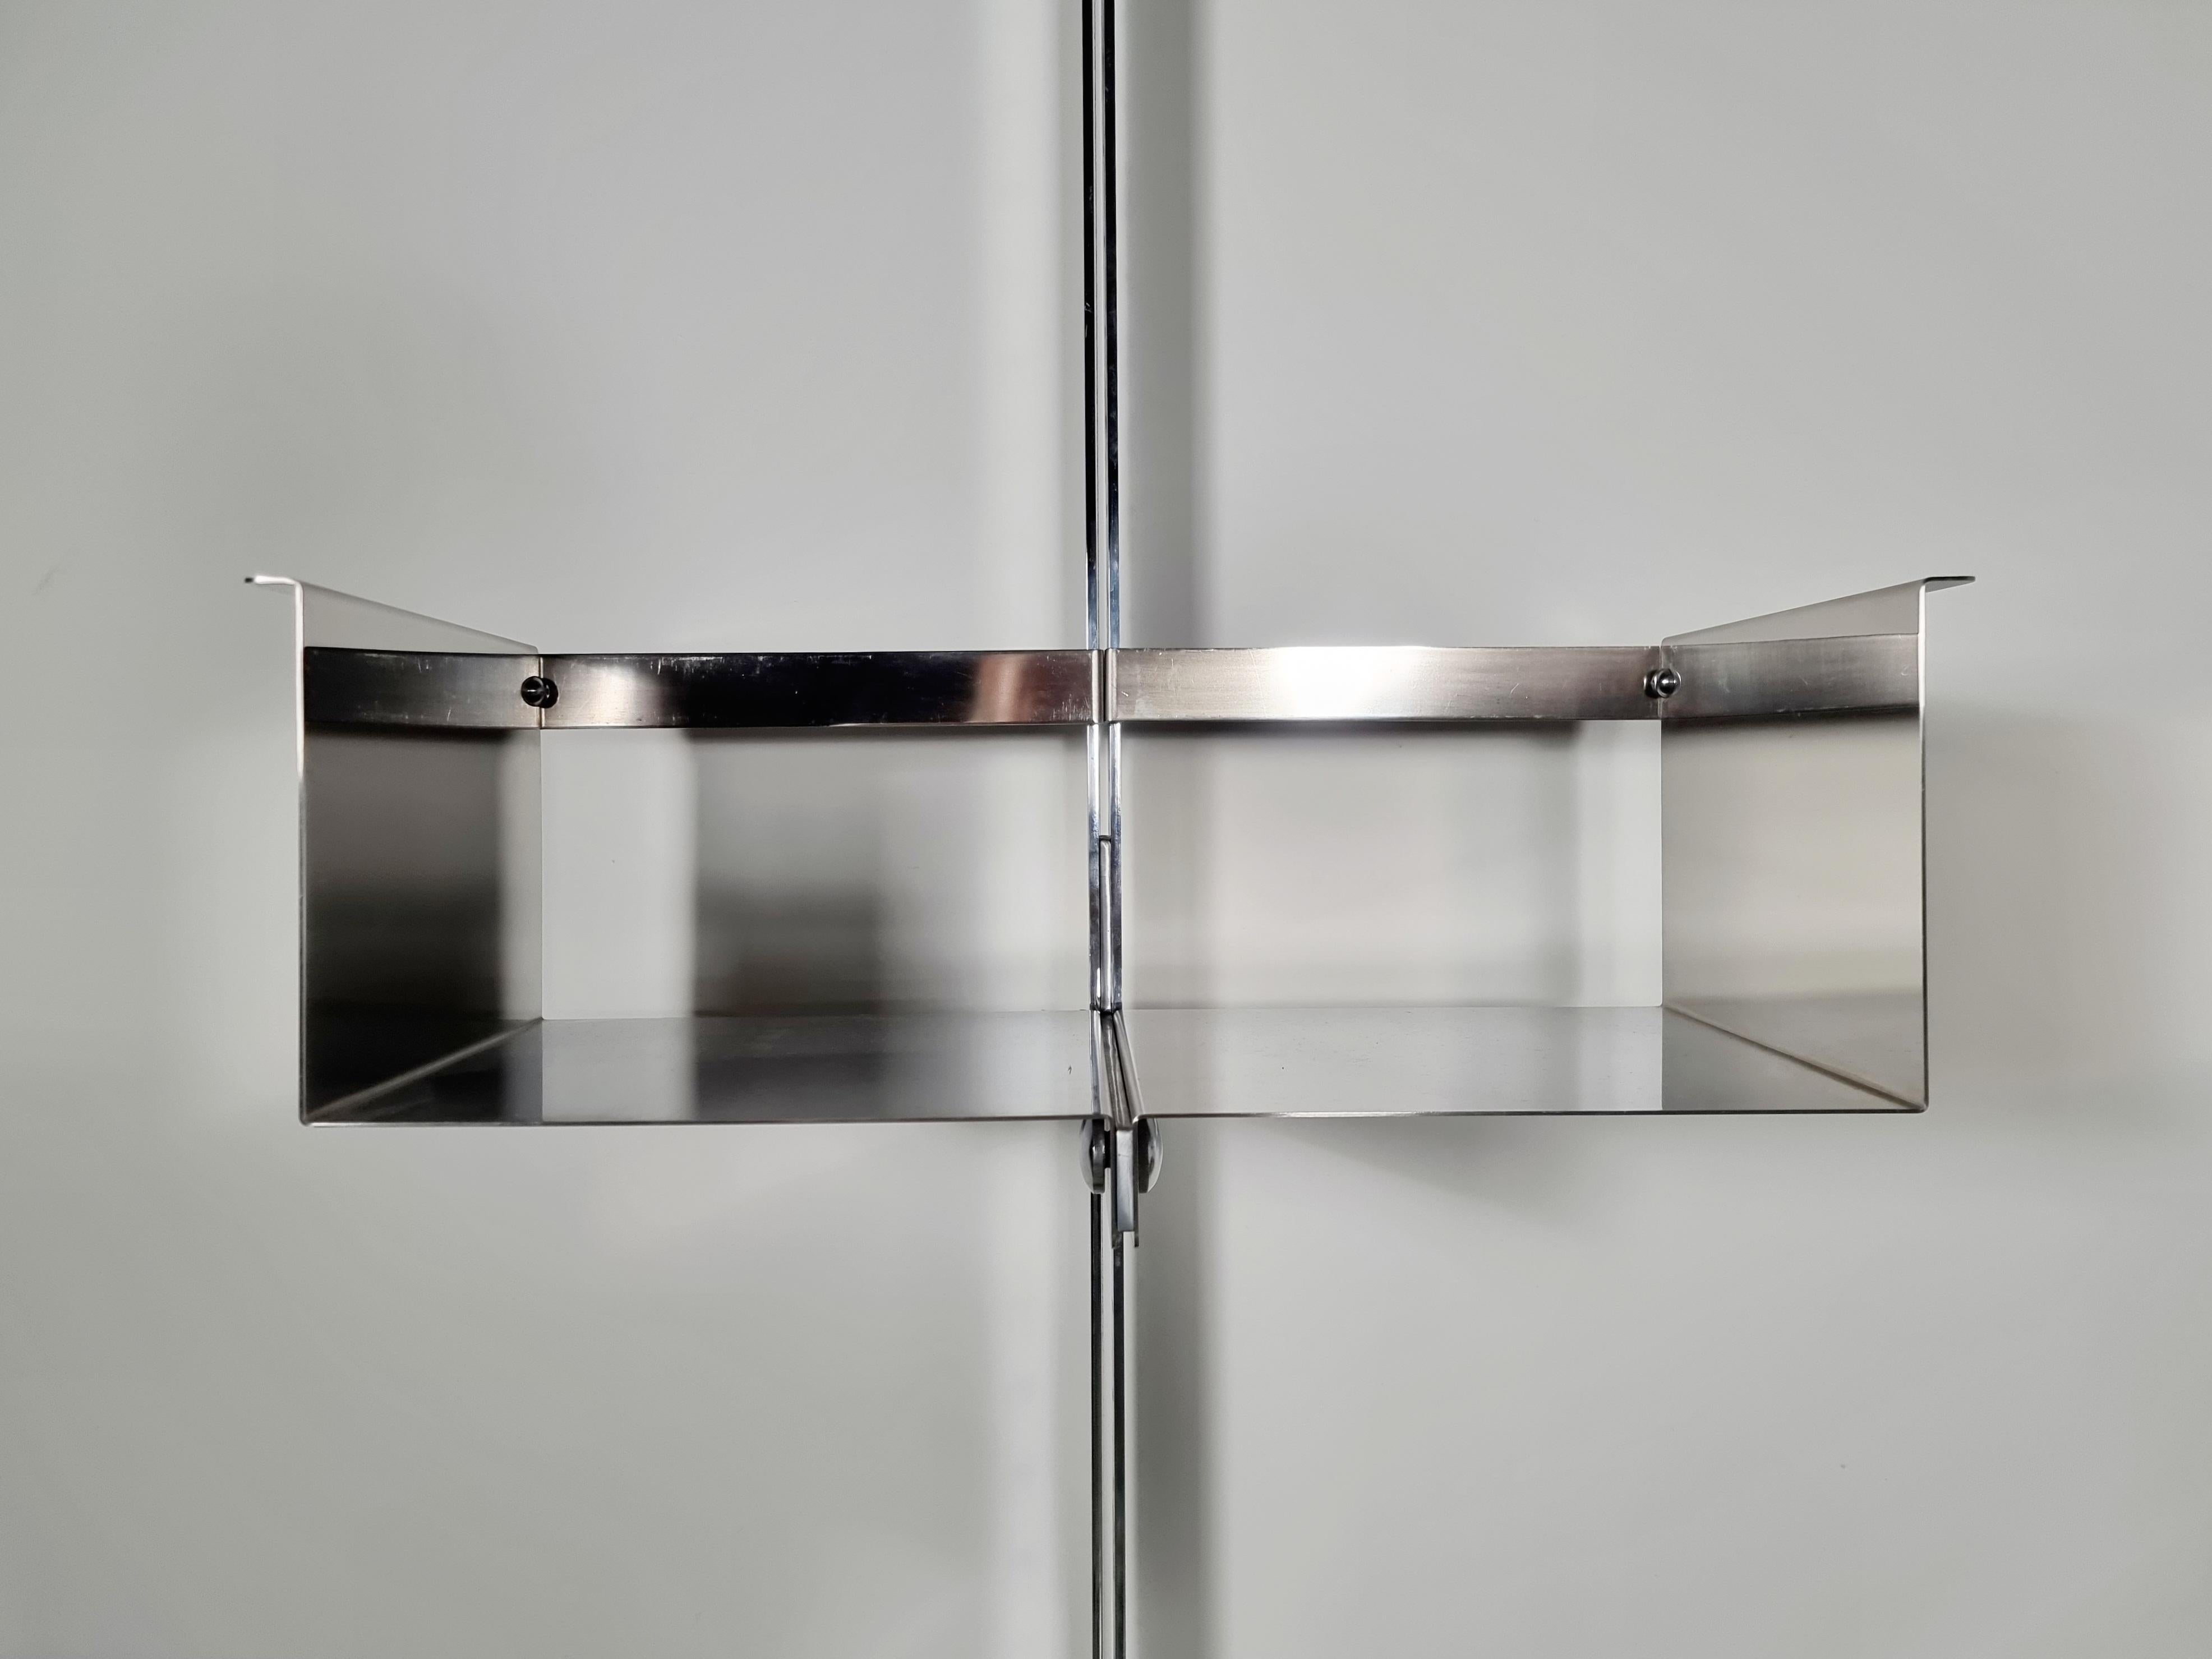  P700 Proposal Wall-Unit in chrome and glass, Vittorio Introini, Saporiti 7